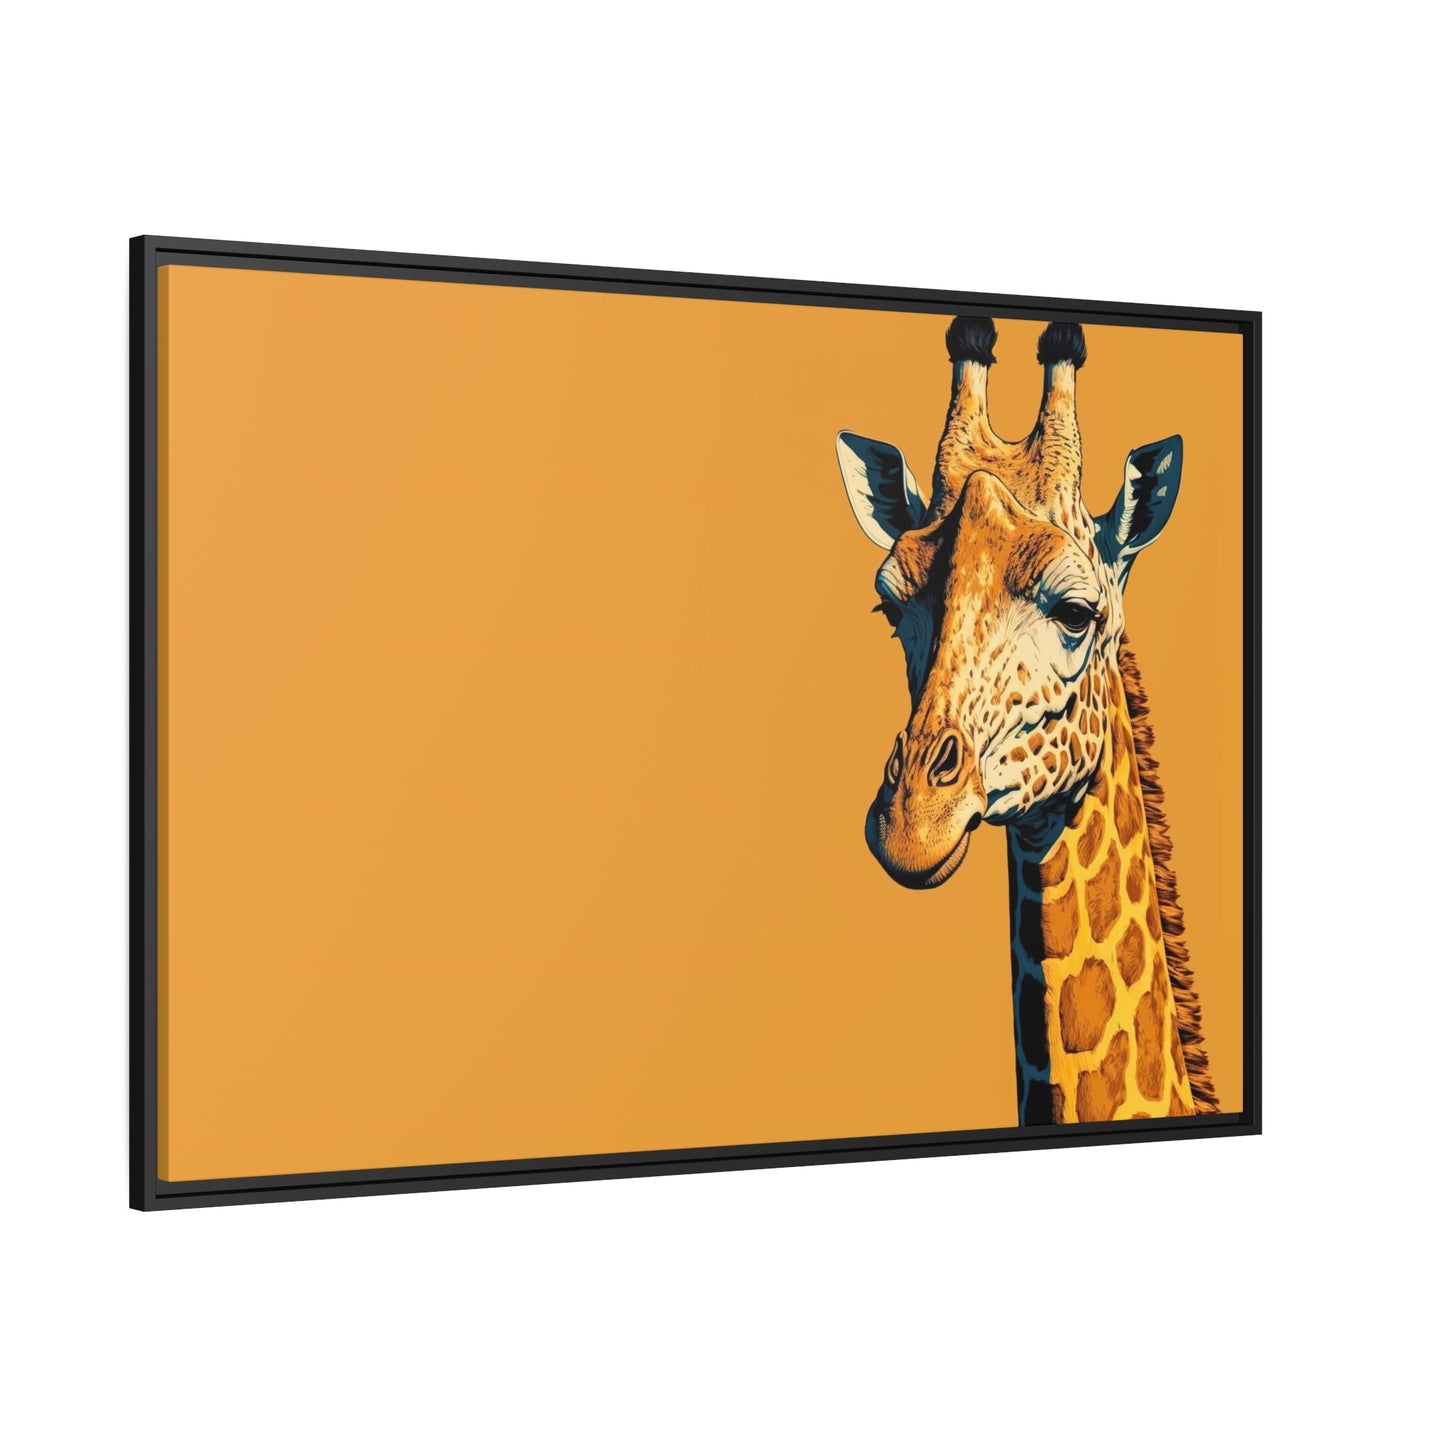 Tall and Proud: Beautiful Giraffe Art on a Framed Canvas & Poster